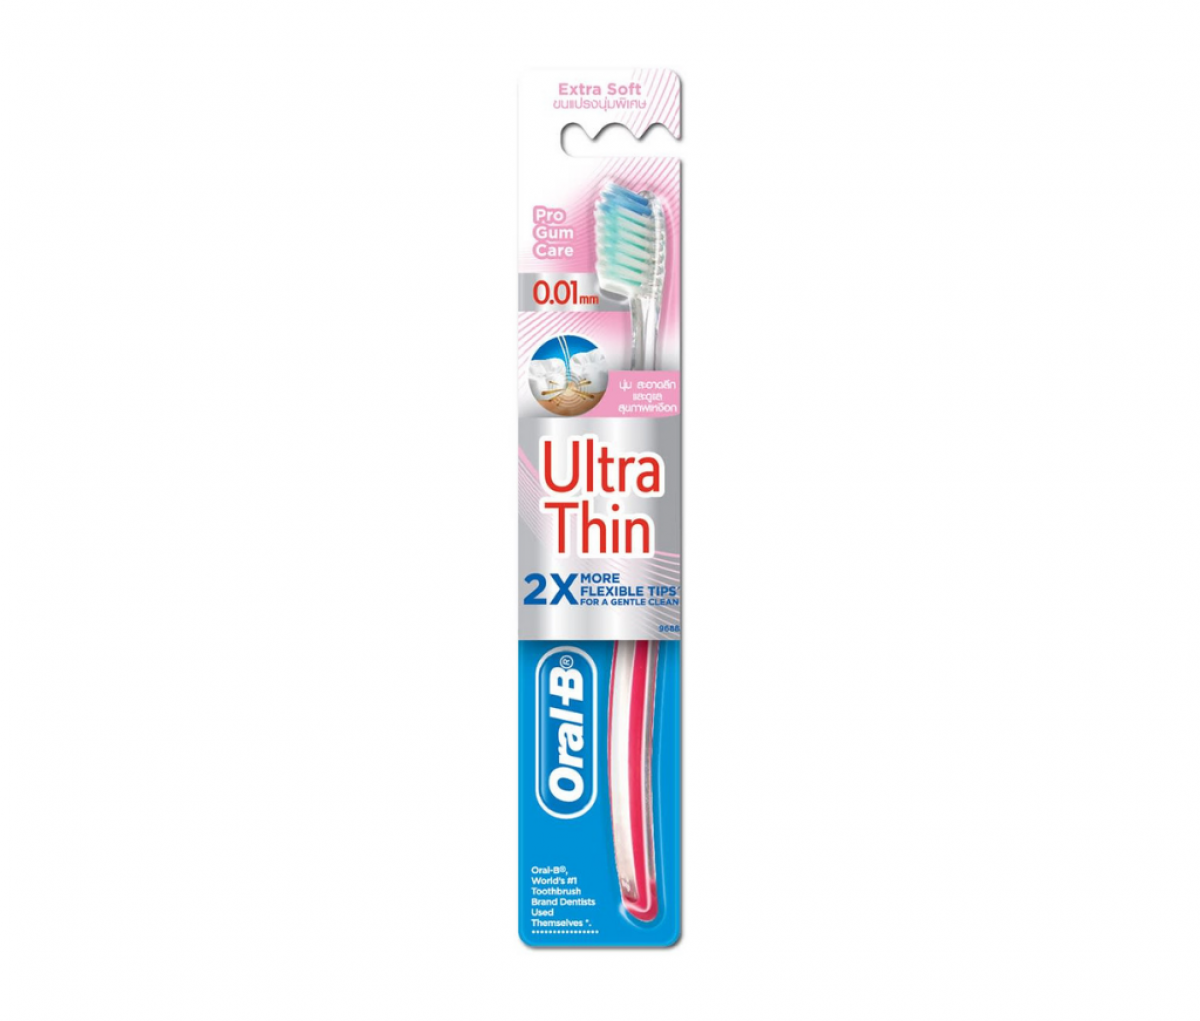 Oral B 1 s Ultra Thin Pro Gum Care